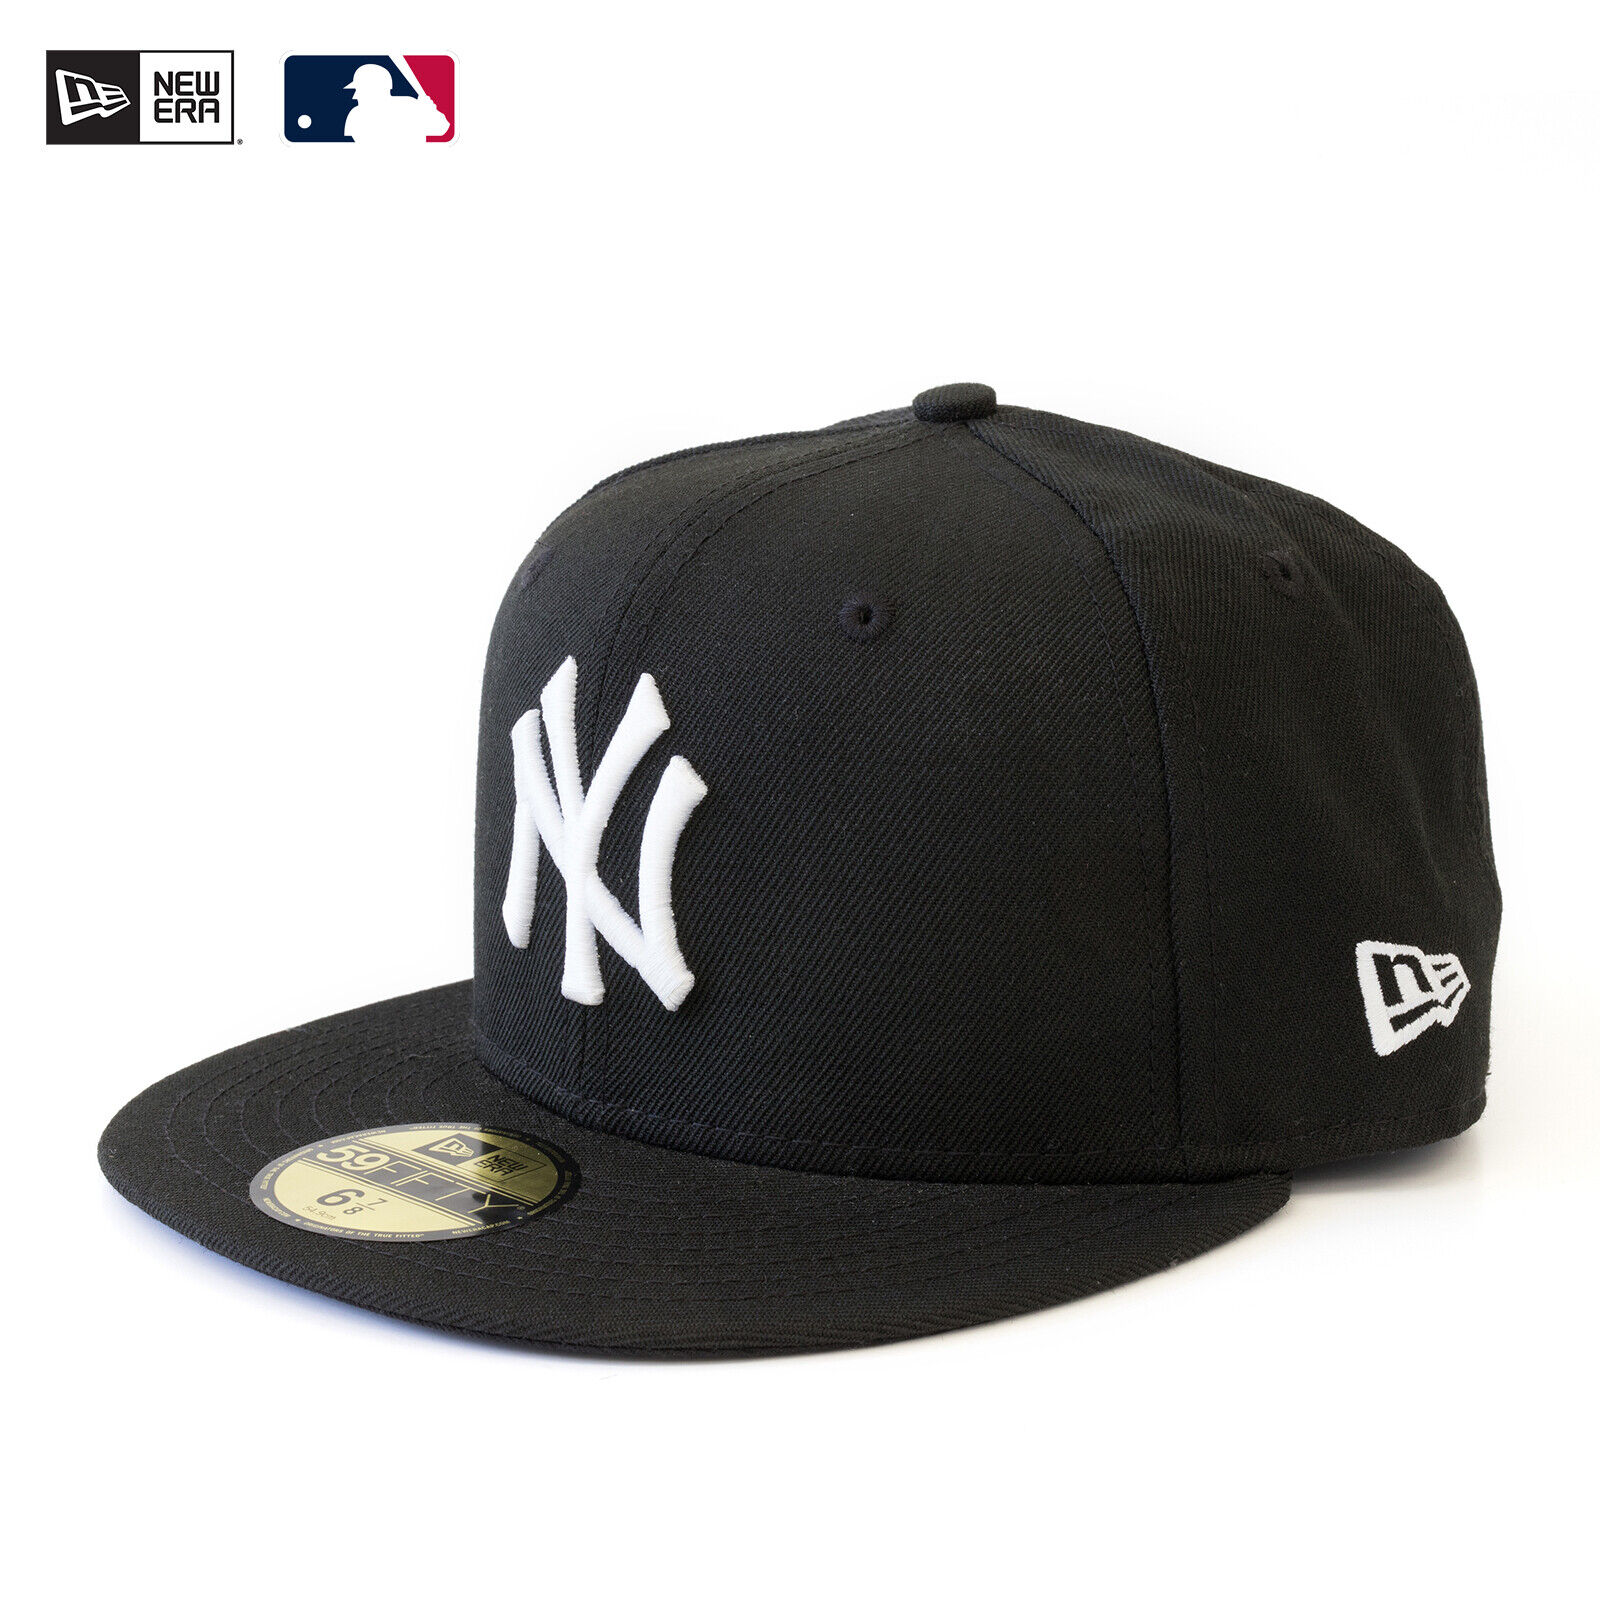 New Era MLB 59Fifty Baseball Cap New York Yankees NY Fitted Kappe Mütze TOP